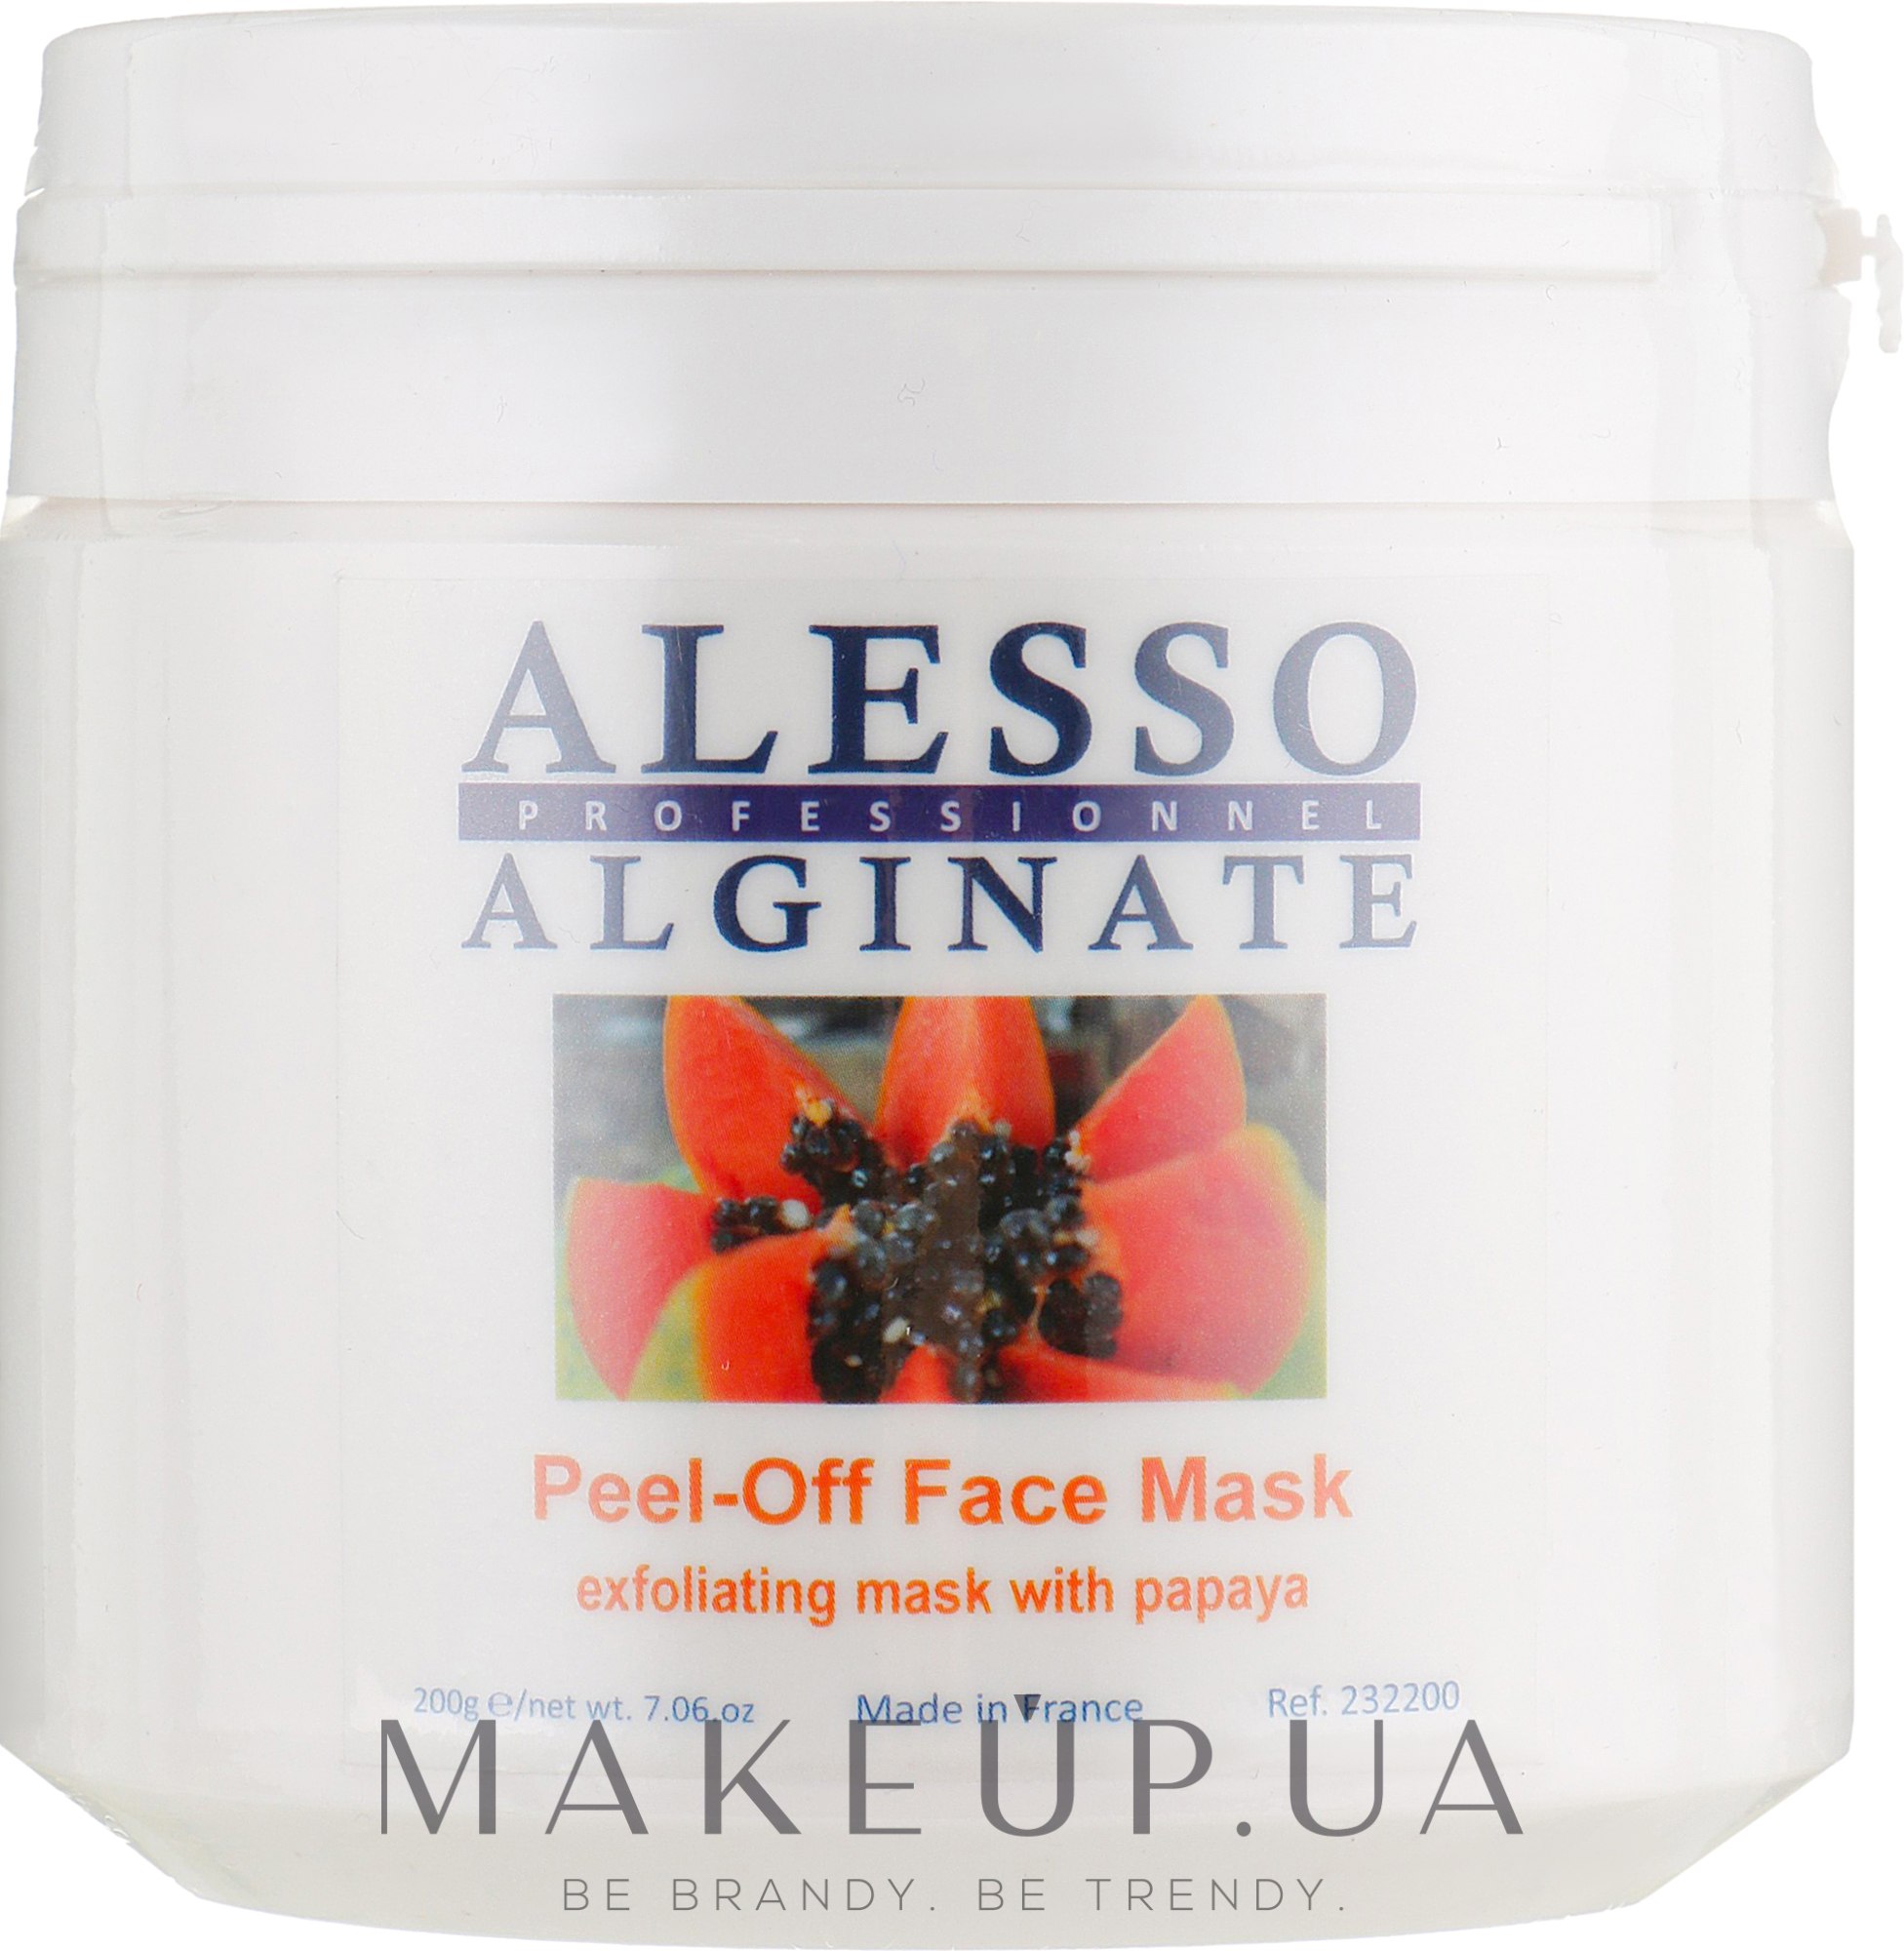 Олія для обличчя альгінатна глибоко очищувальна і відлущувальна з папаєю - Alesso Professionnel Alginate Exfoliating Peel-Off Face Mask With Papaya — фото 200g